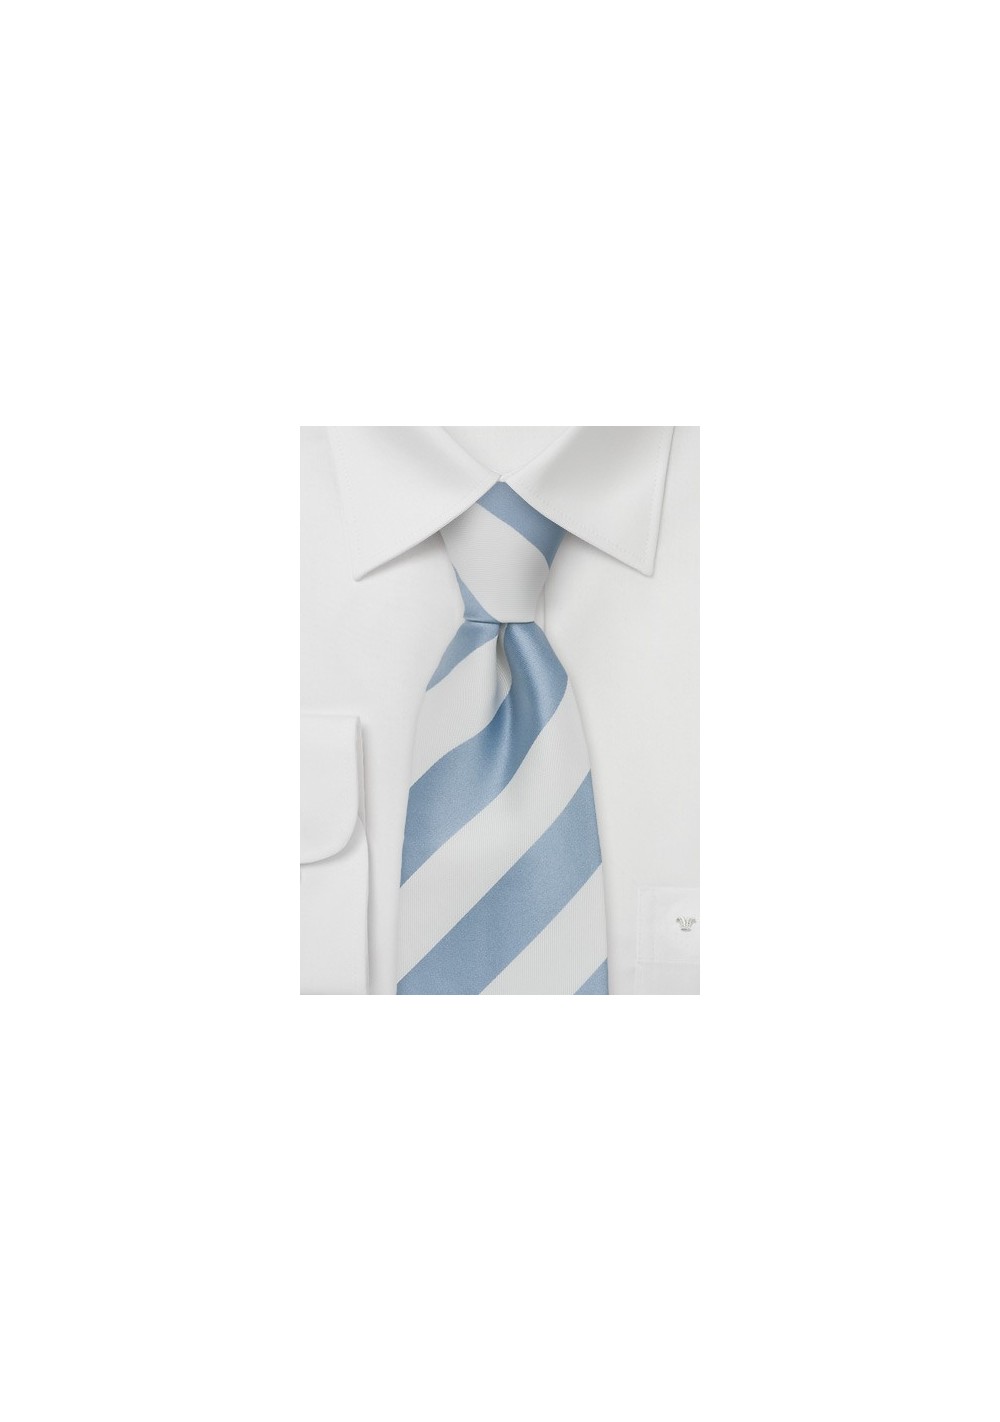 Fine Silk Tie With Stripes in White & Baby-Blue